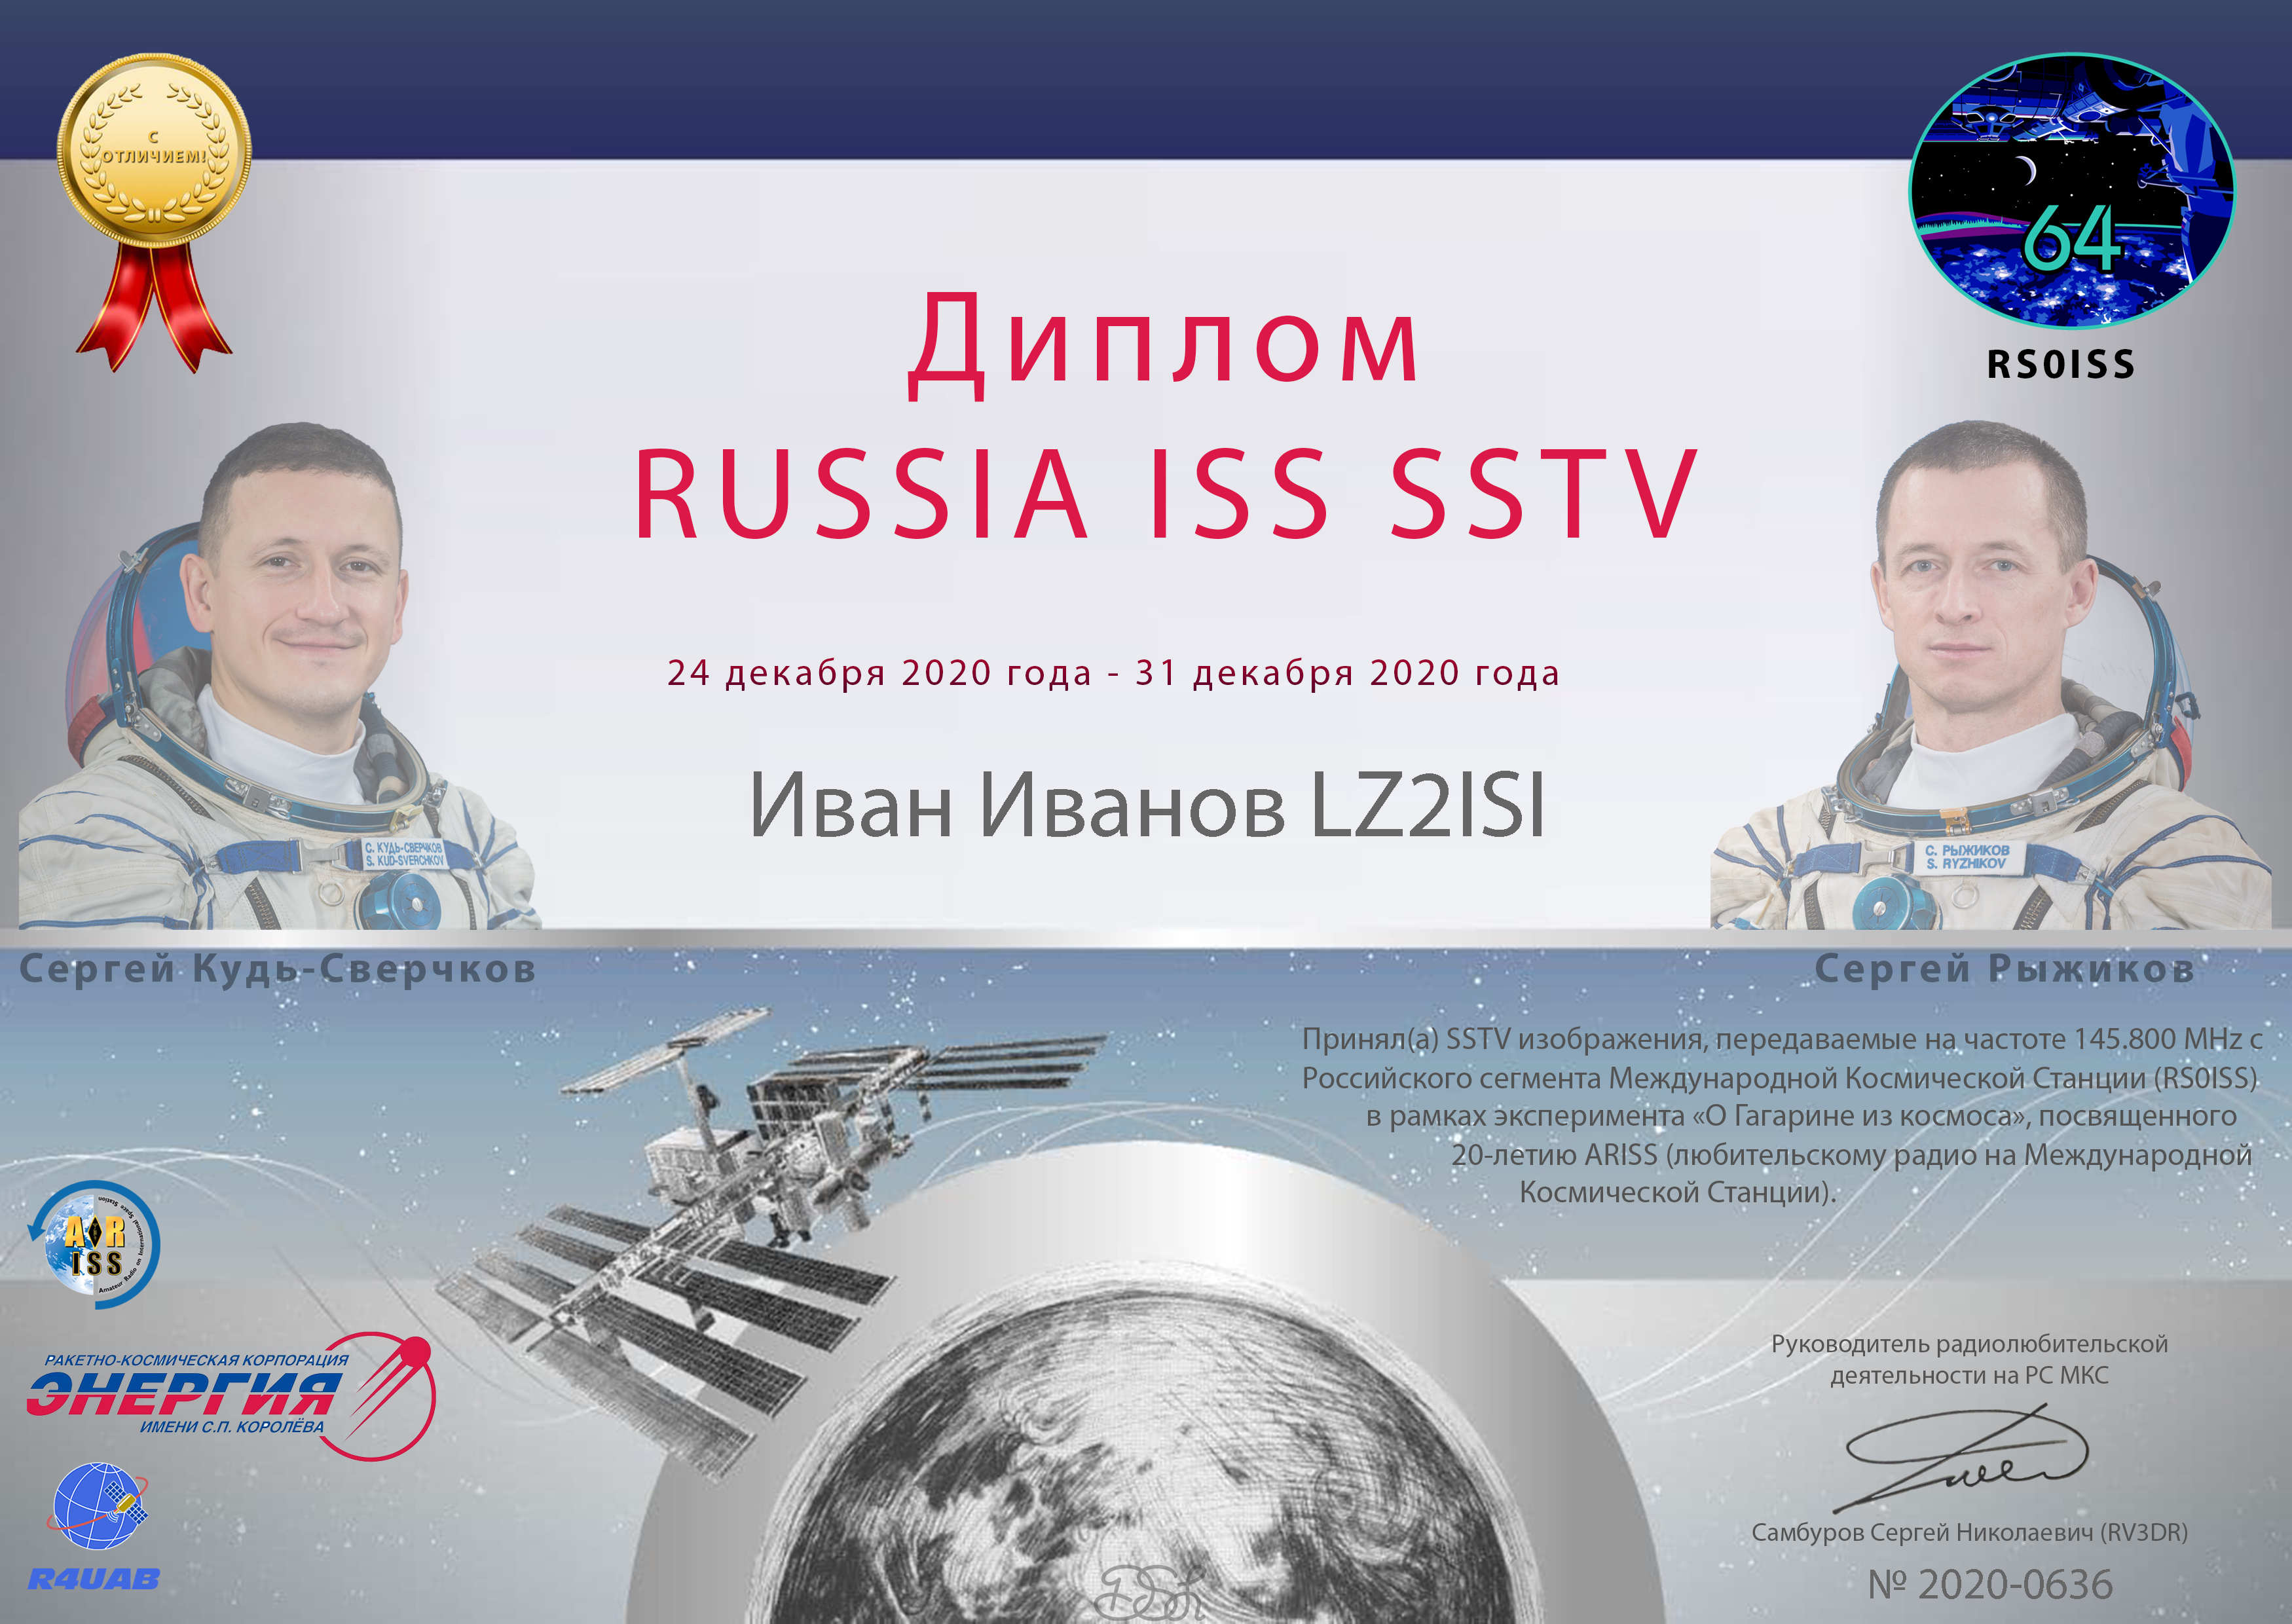 Диплом «Russia ISS SSTV»